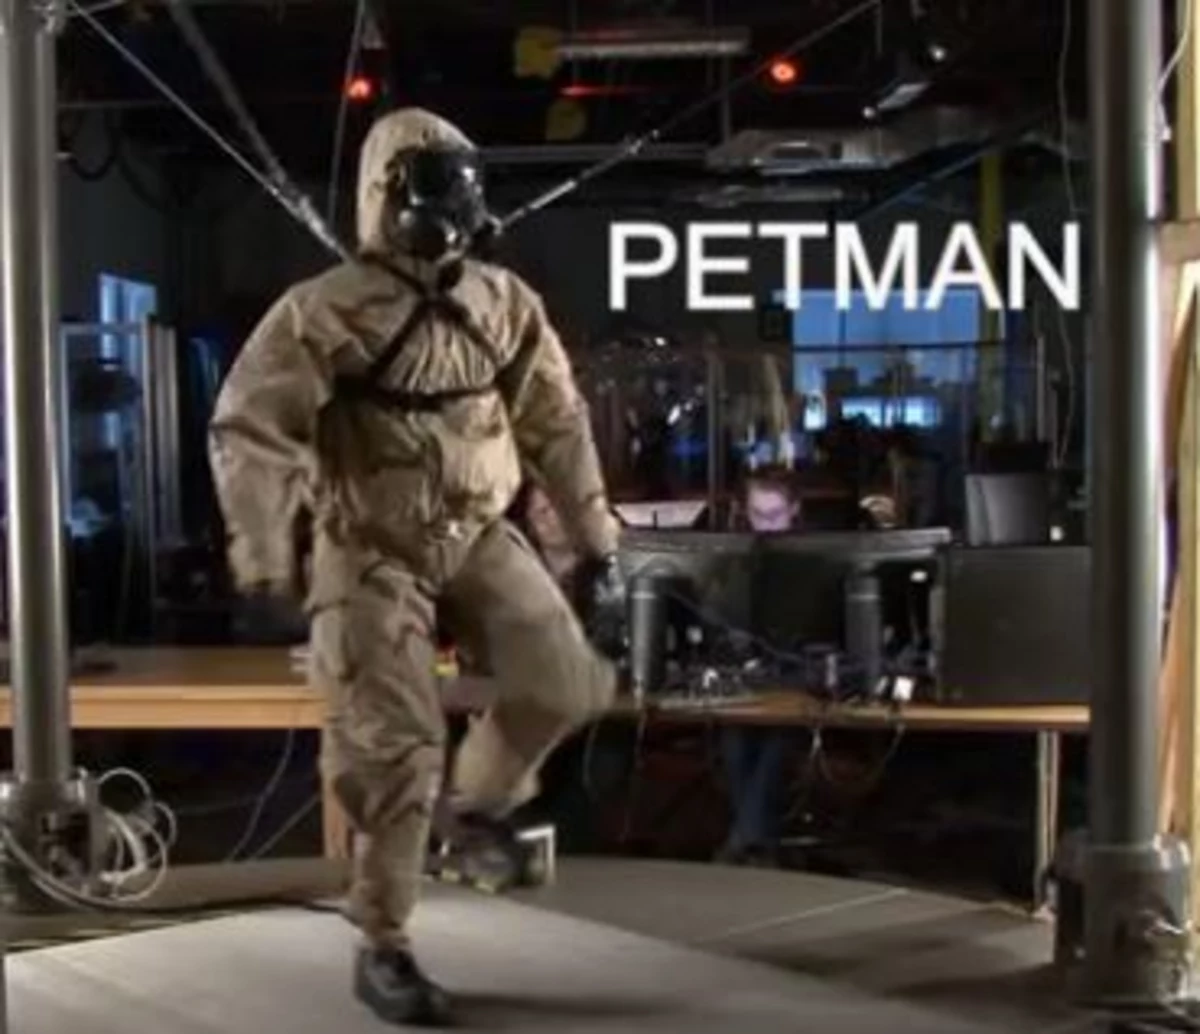 Petman' The Humanoid Robot [VIDEO+POLL]